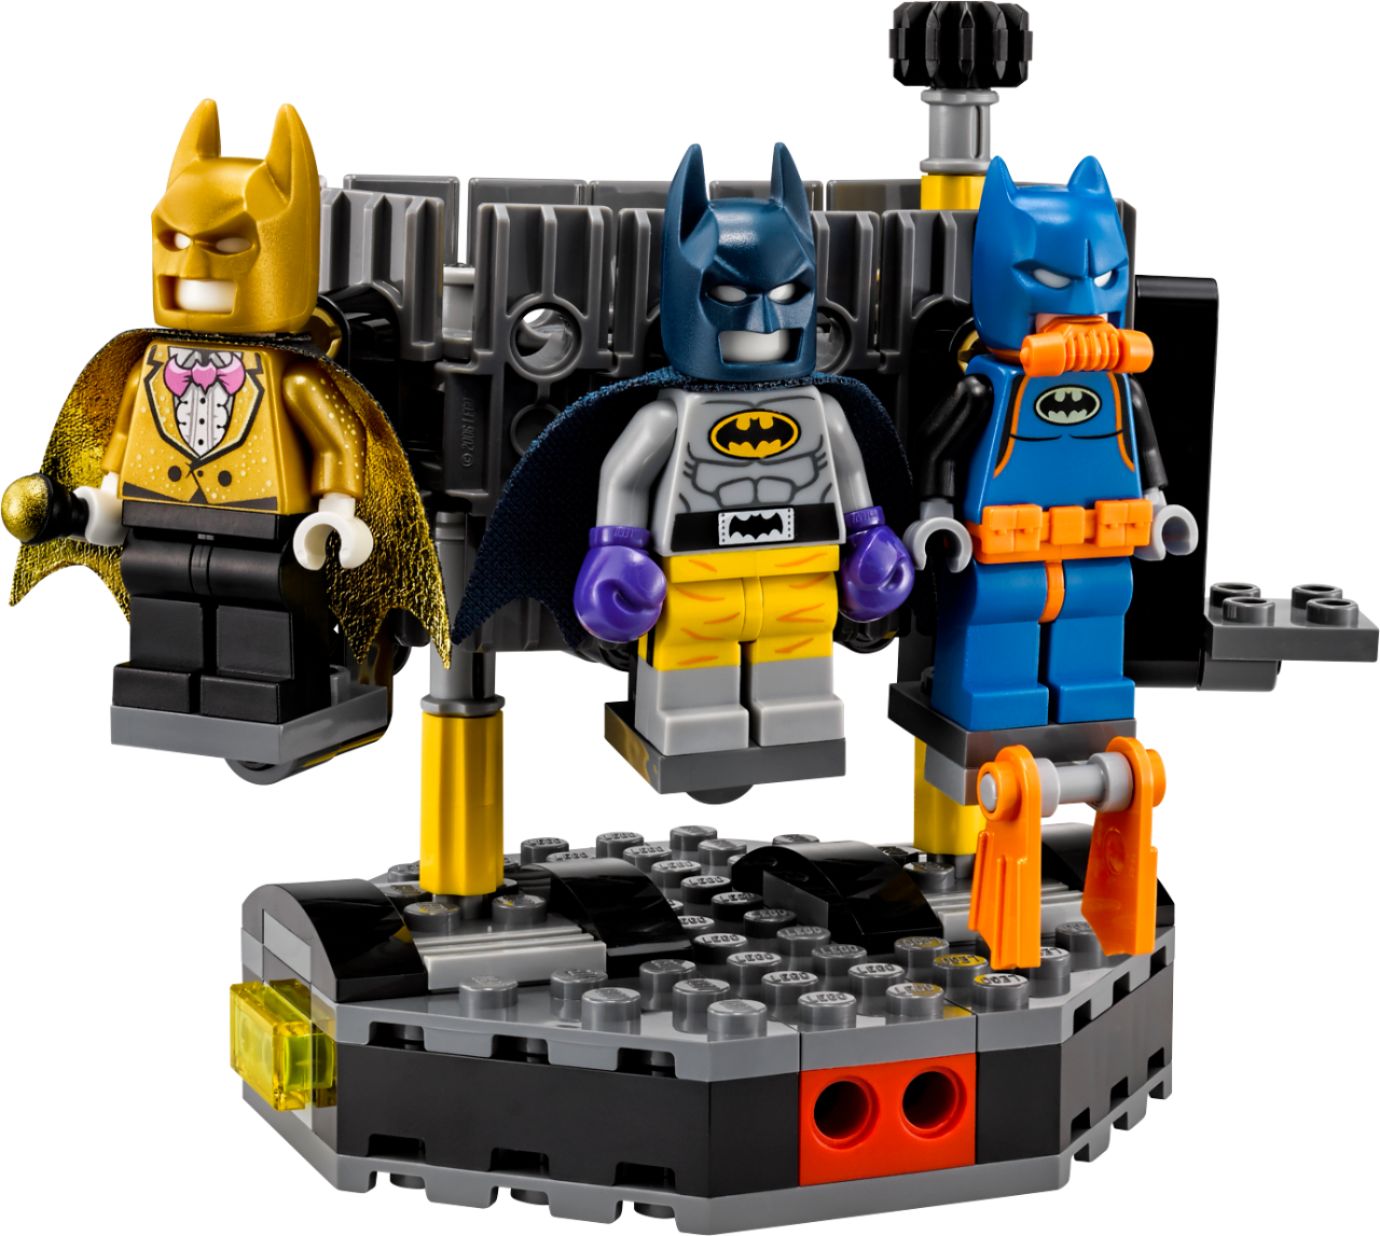 The Ultimate Batcave - The Lego Batman Movie  Lego batman movie, Lego  batman, Batman lego sets